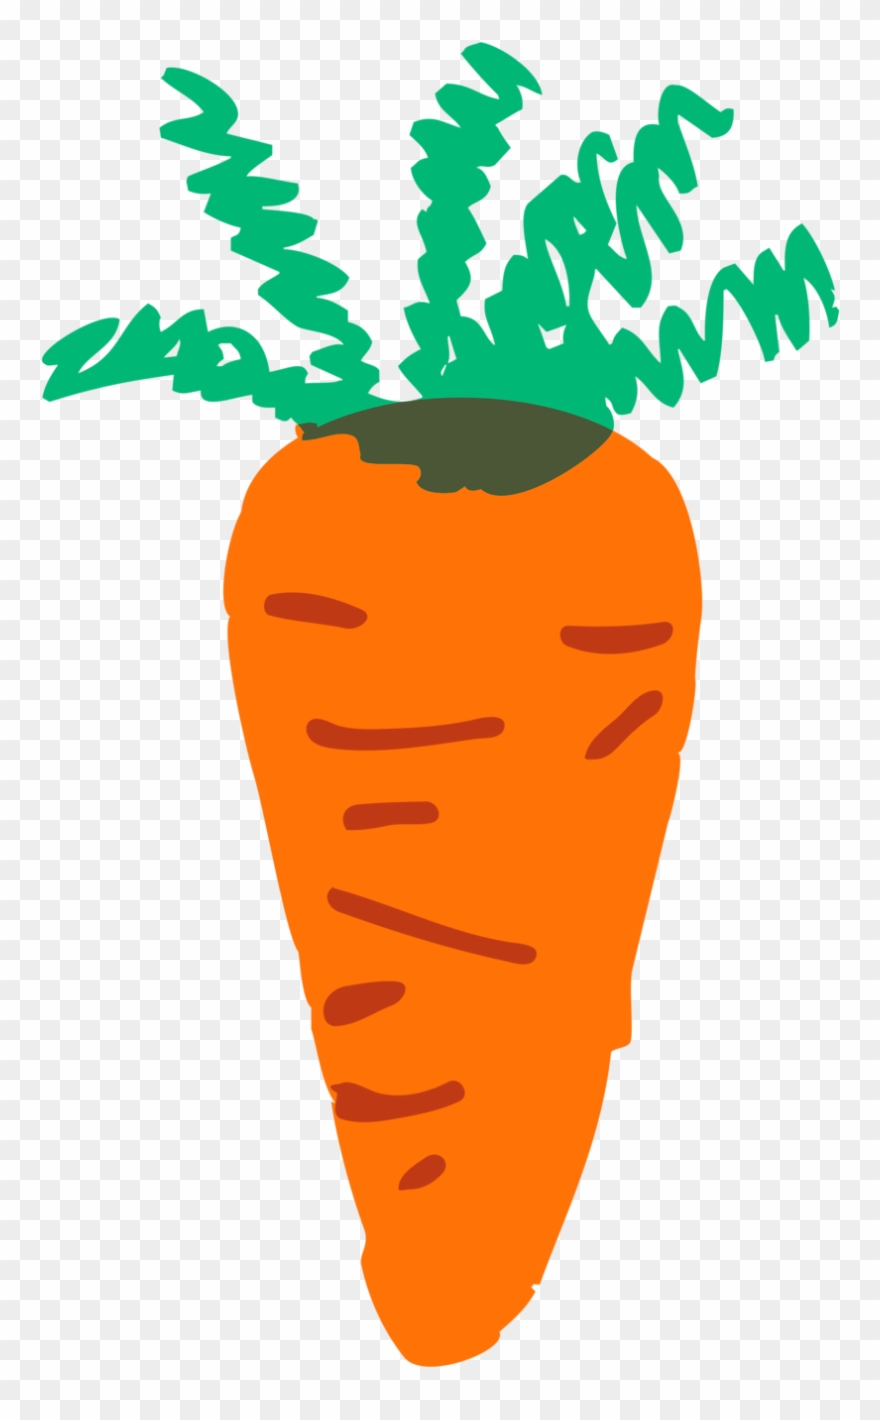 carrot clipart bag carrot